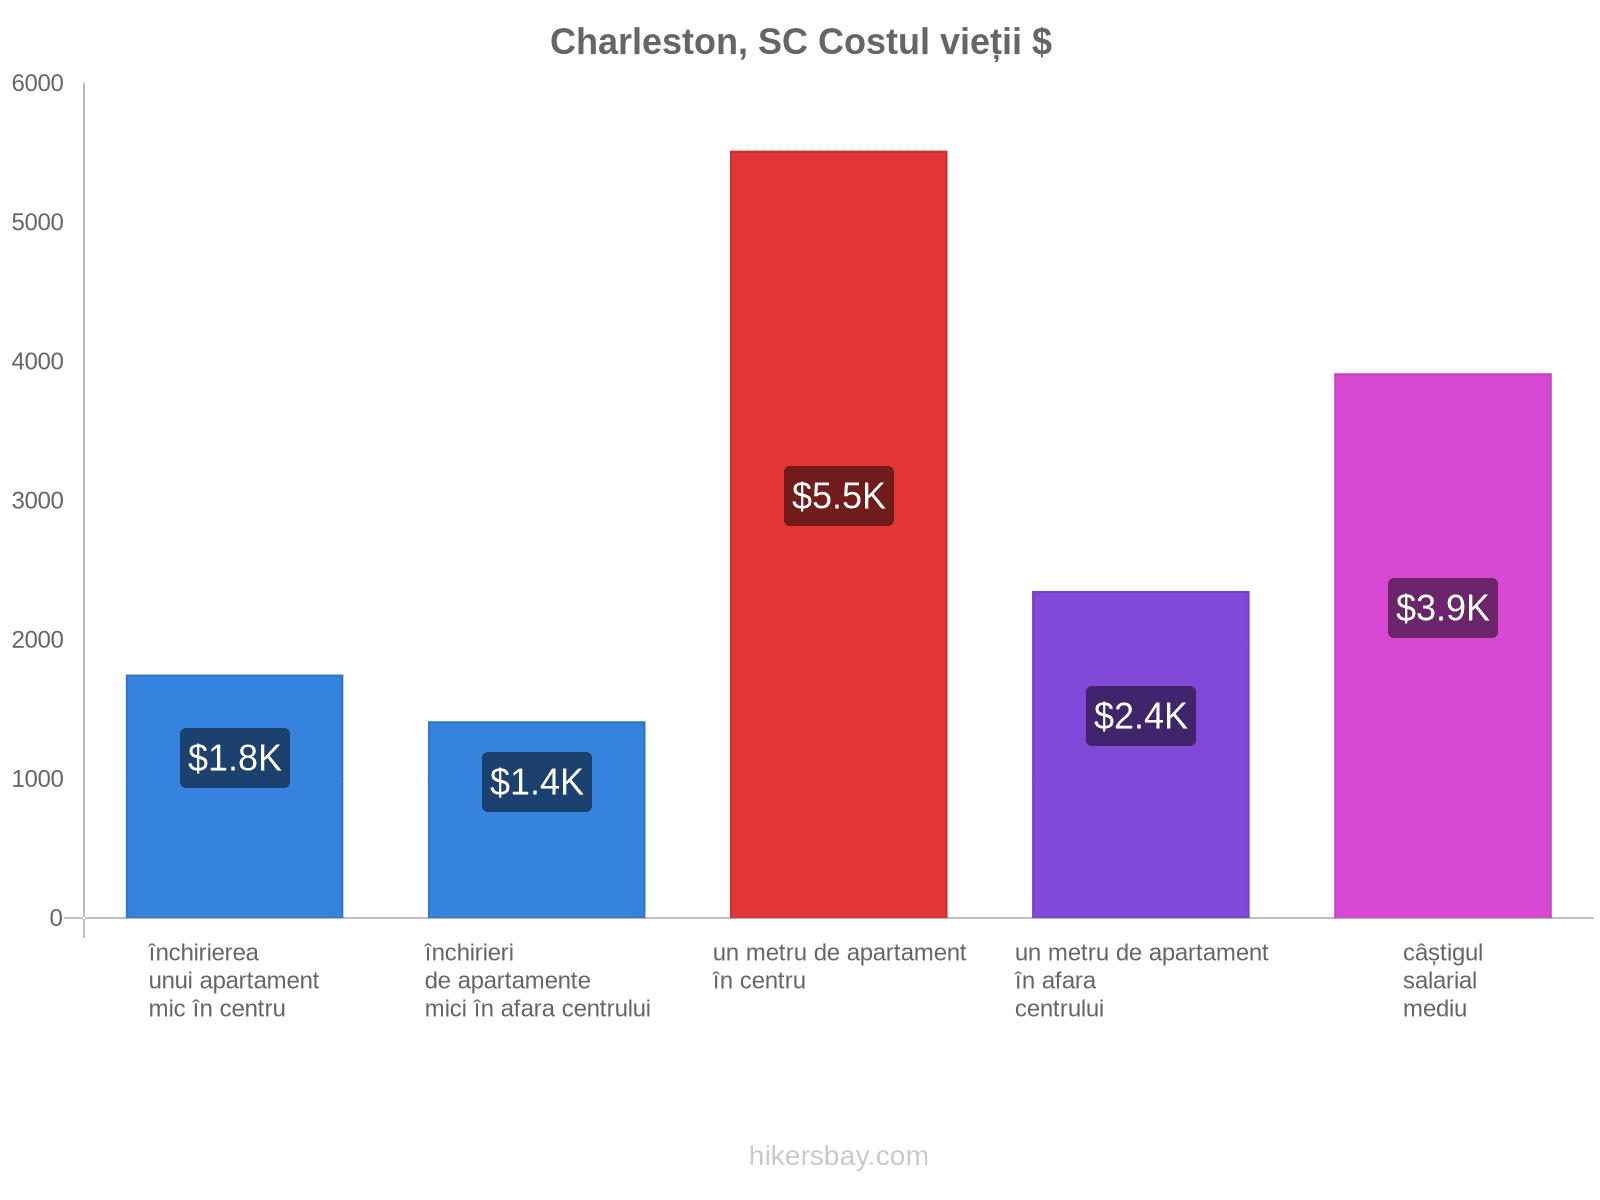 Charleston, SC costul vieții hikersbay.com